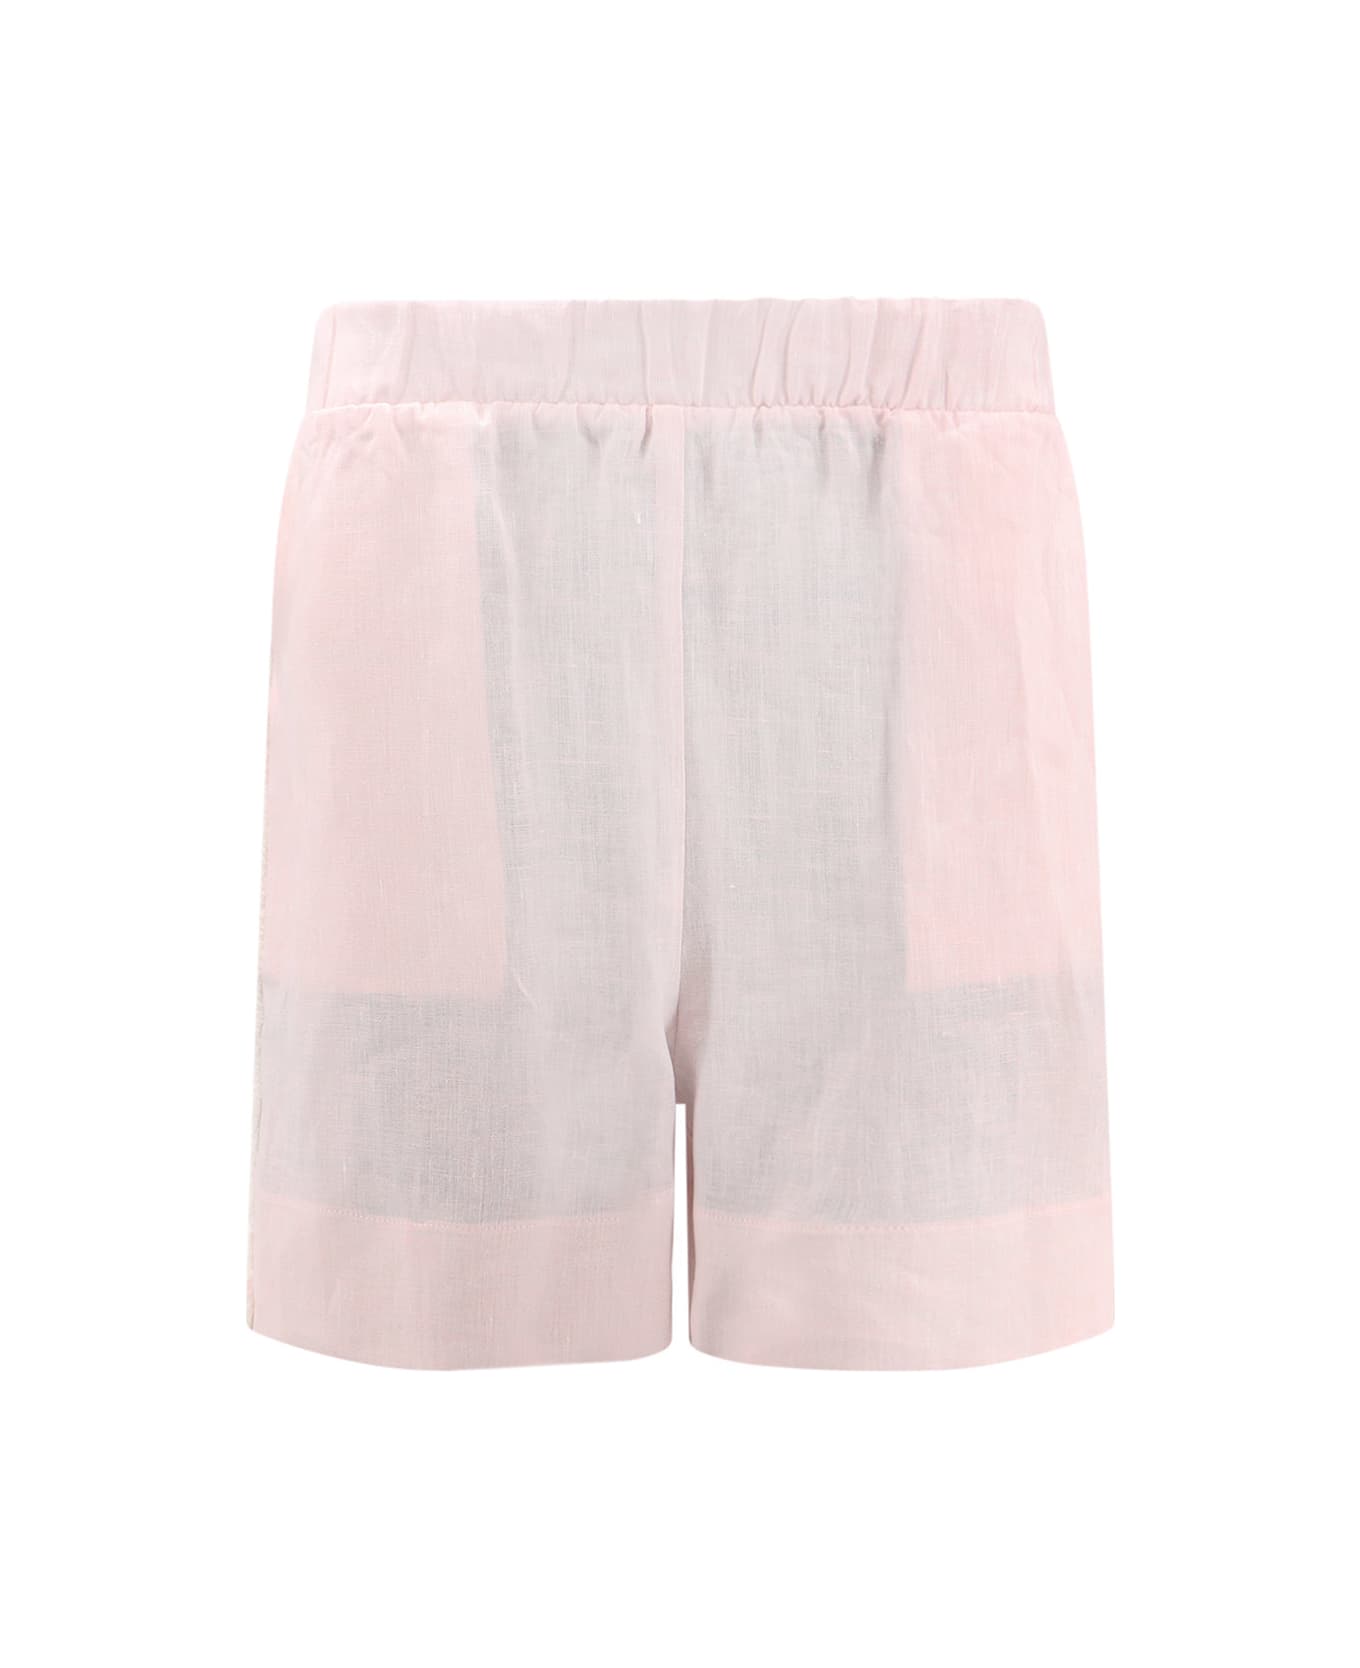 MVP Wardrobe Shorts - Pink